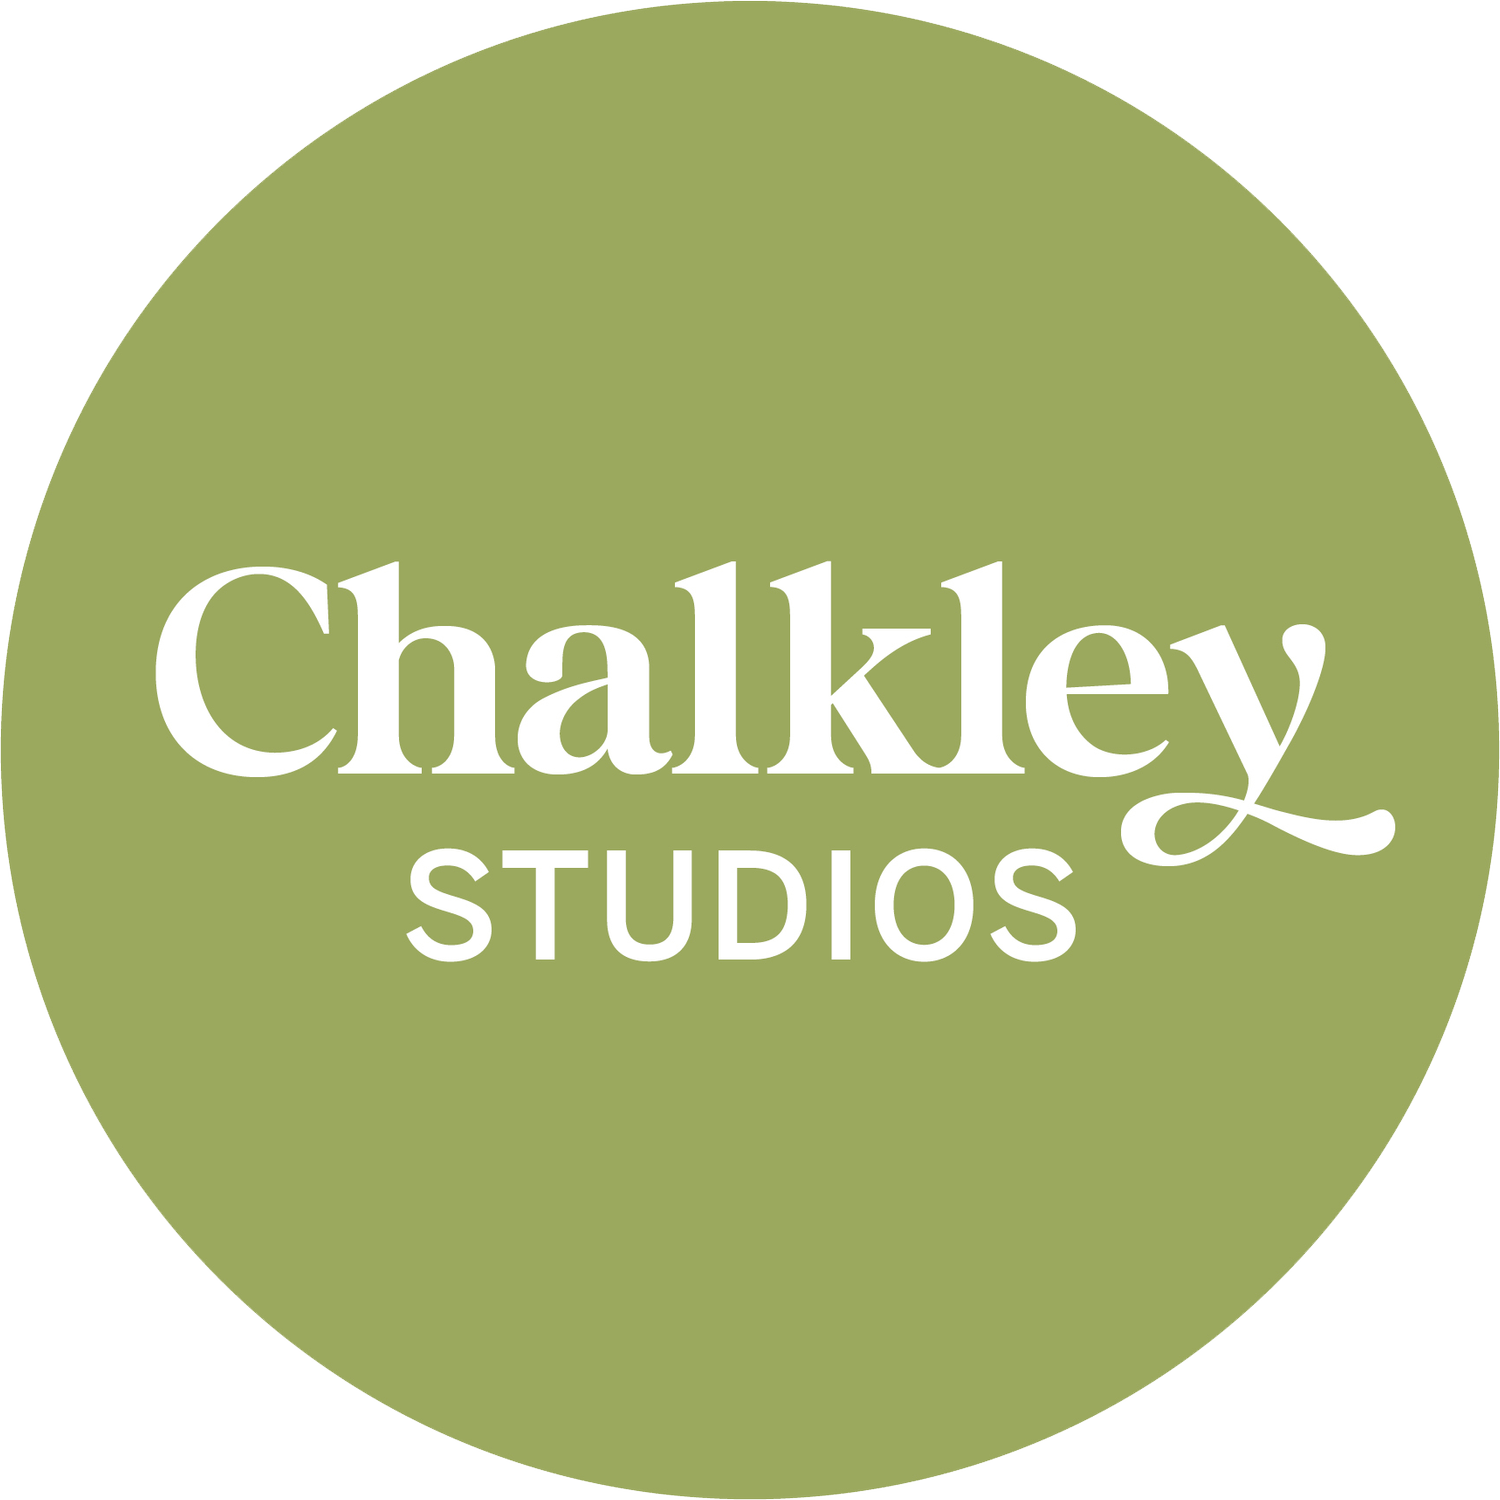 Chalkley Studios